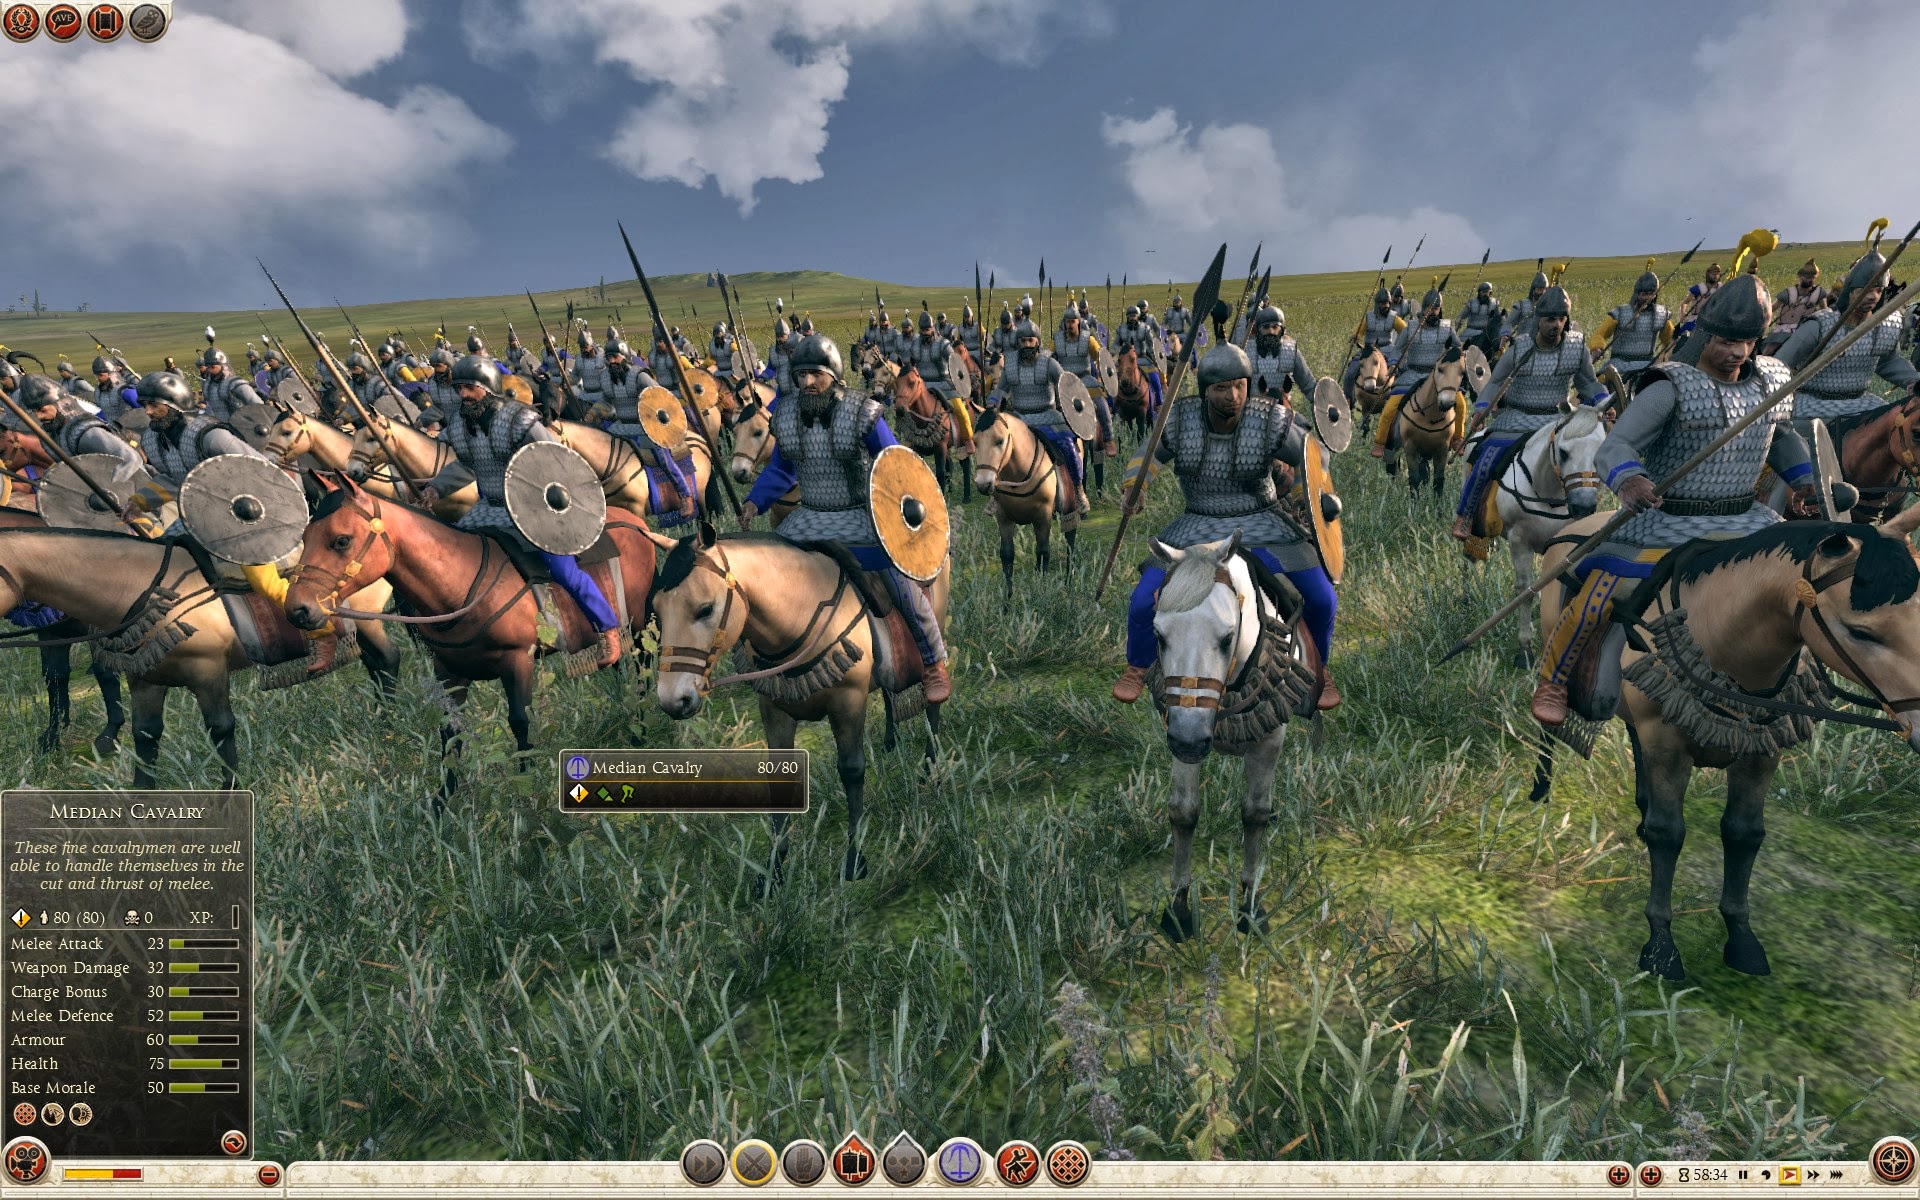 Median Cavalry